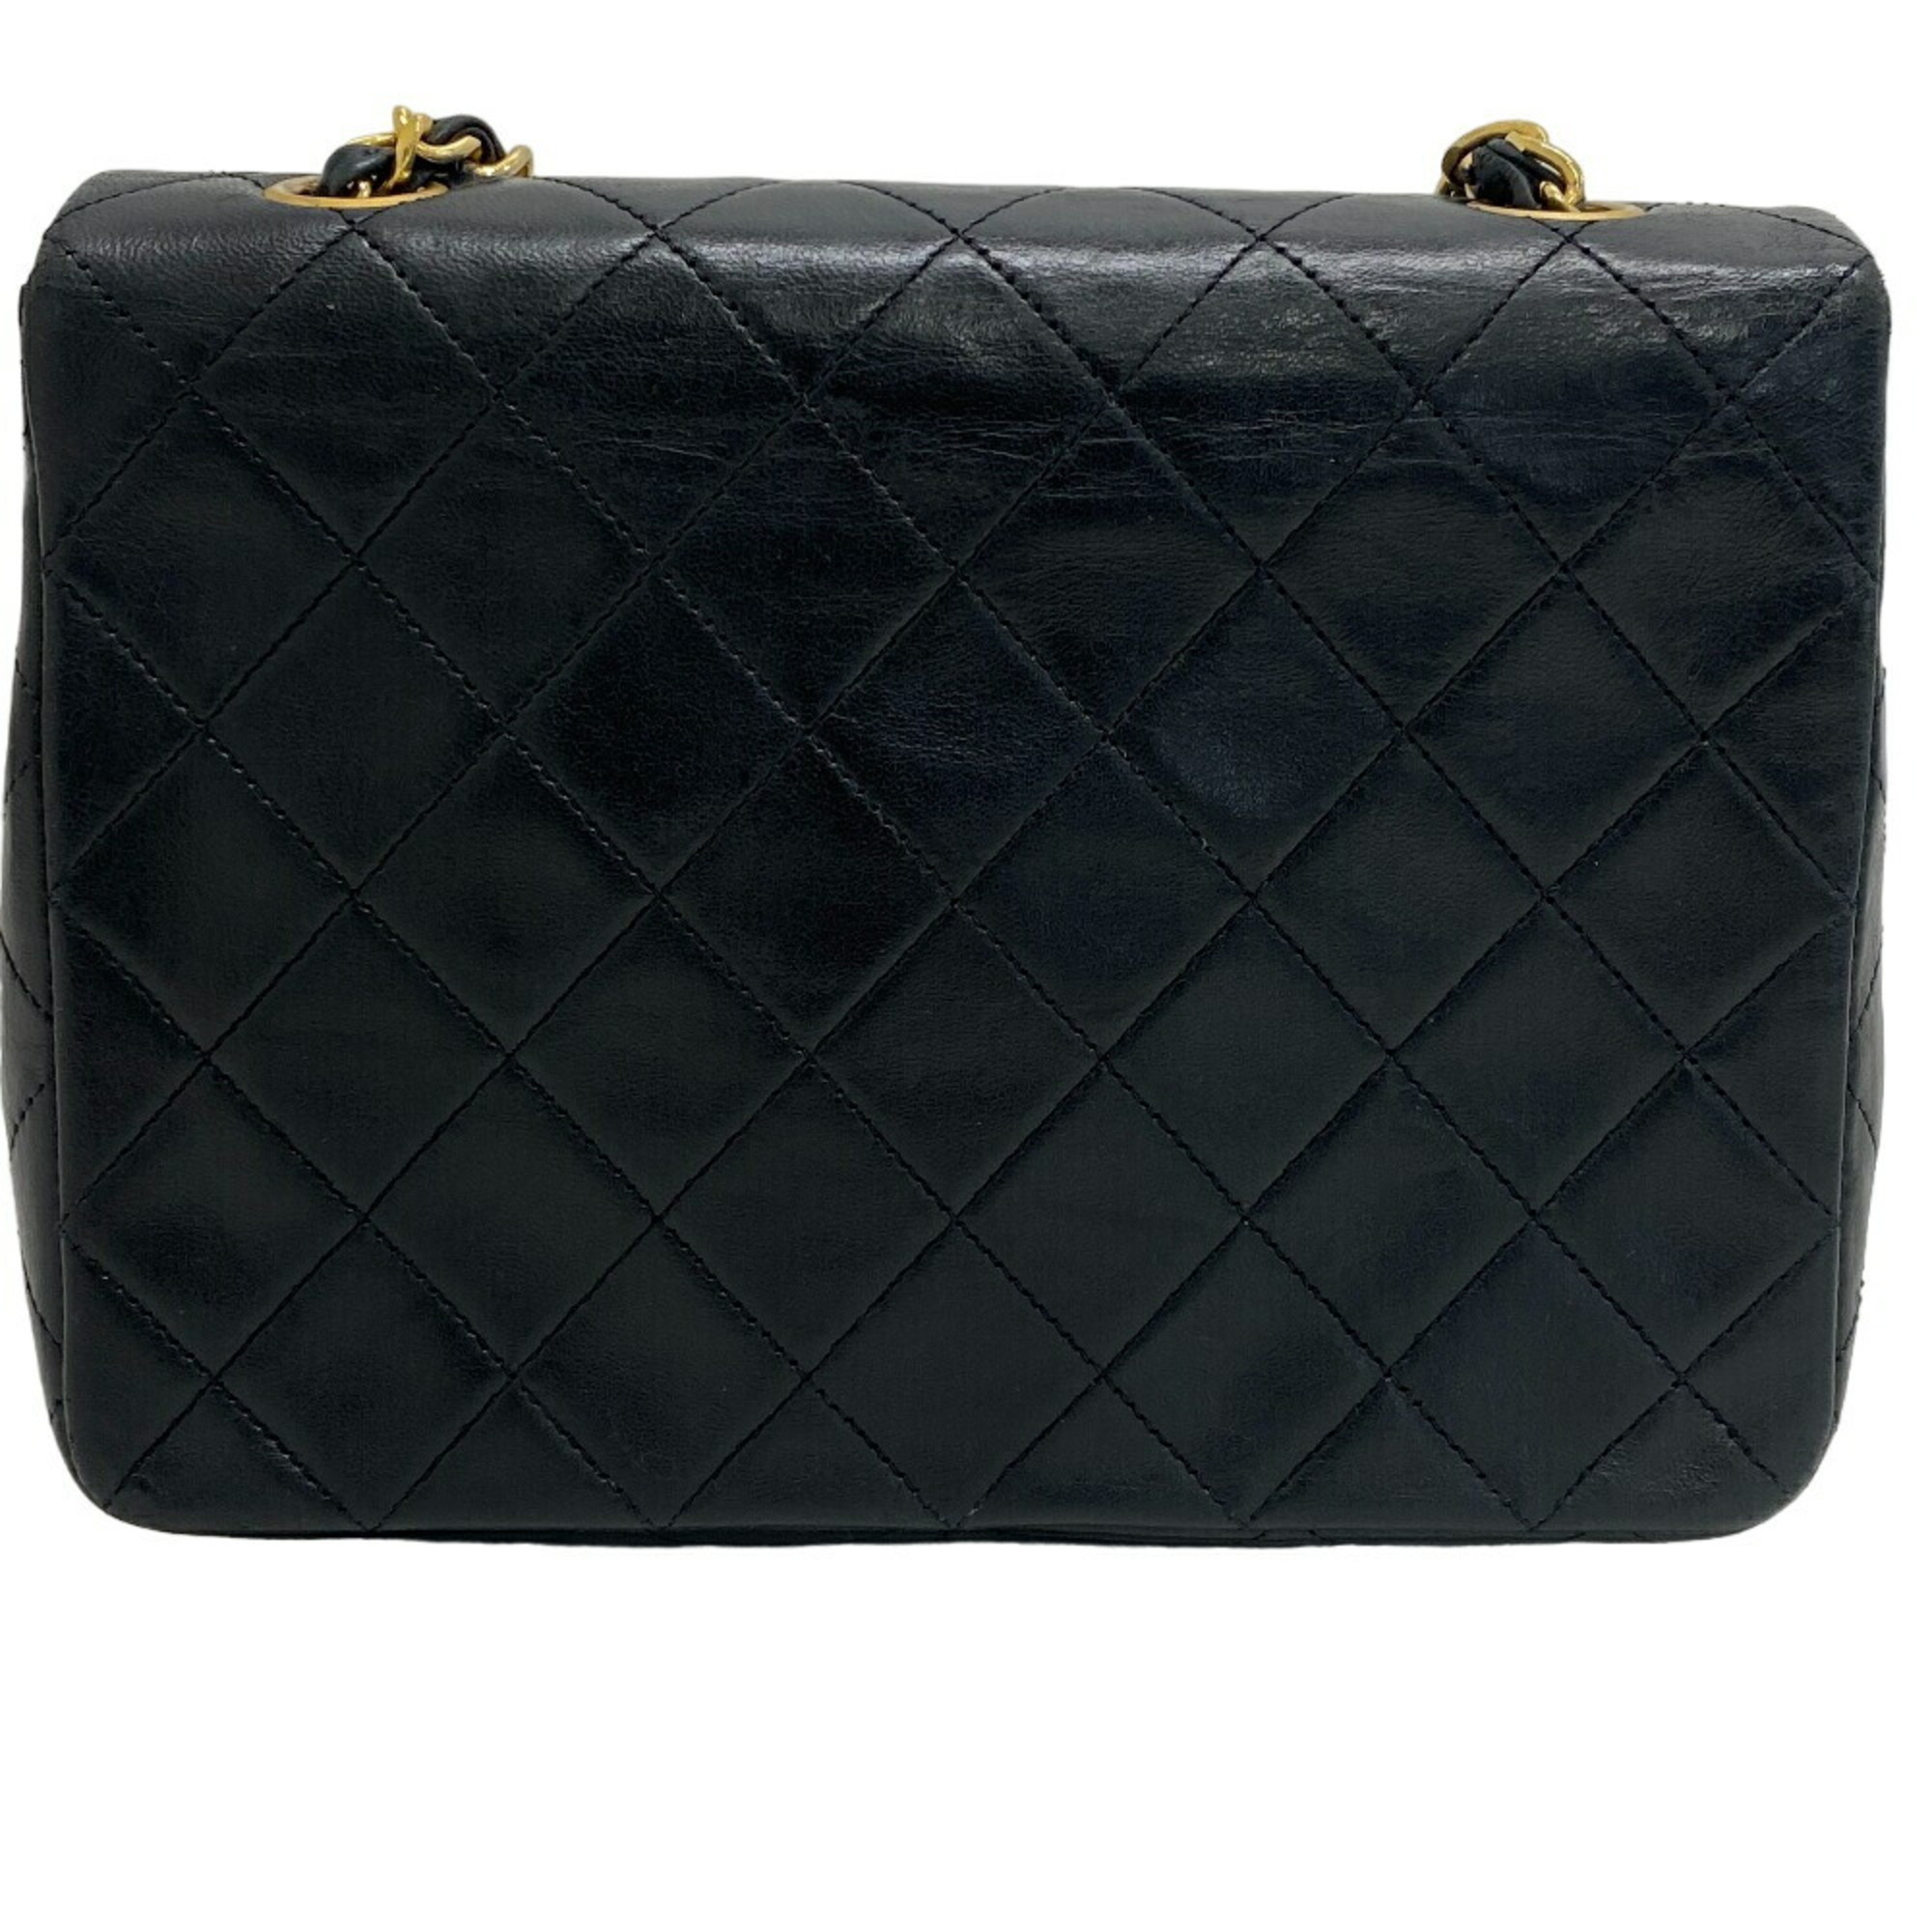 CHANEL Chanel Matelasse 20 Single Flap Chain Coco Mark Shoulder Bag Black Women's